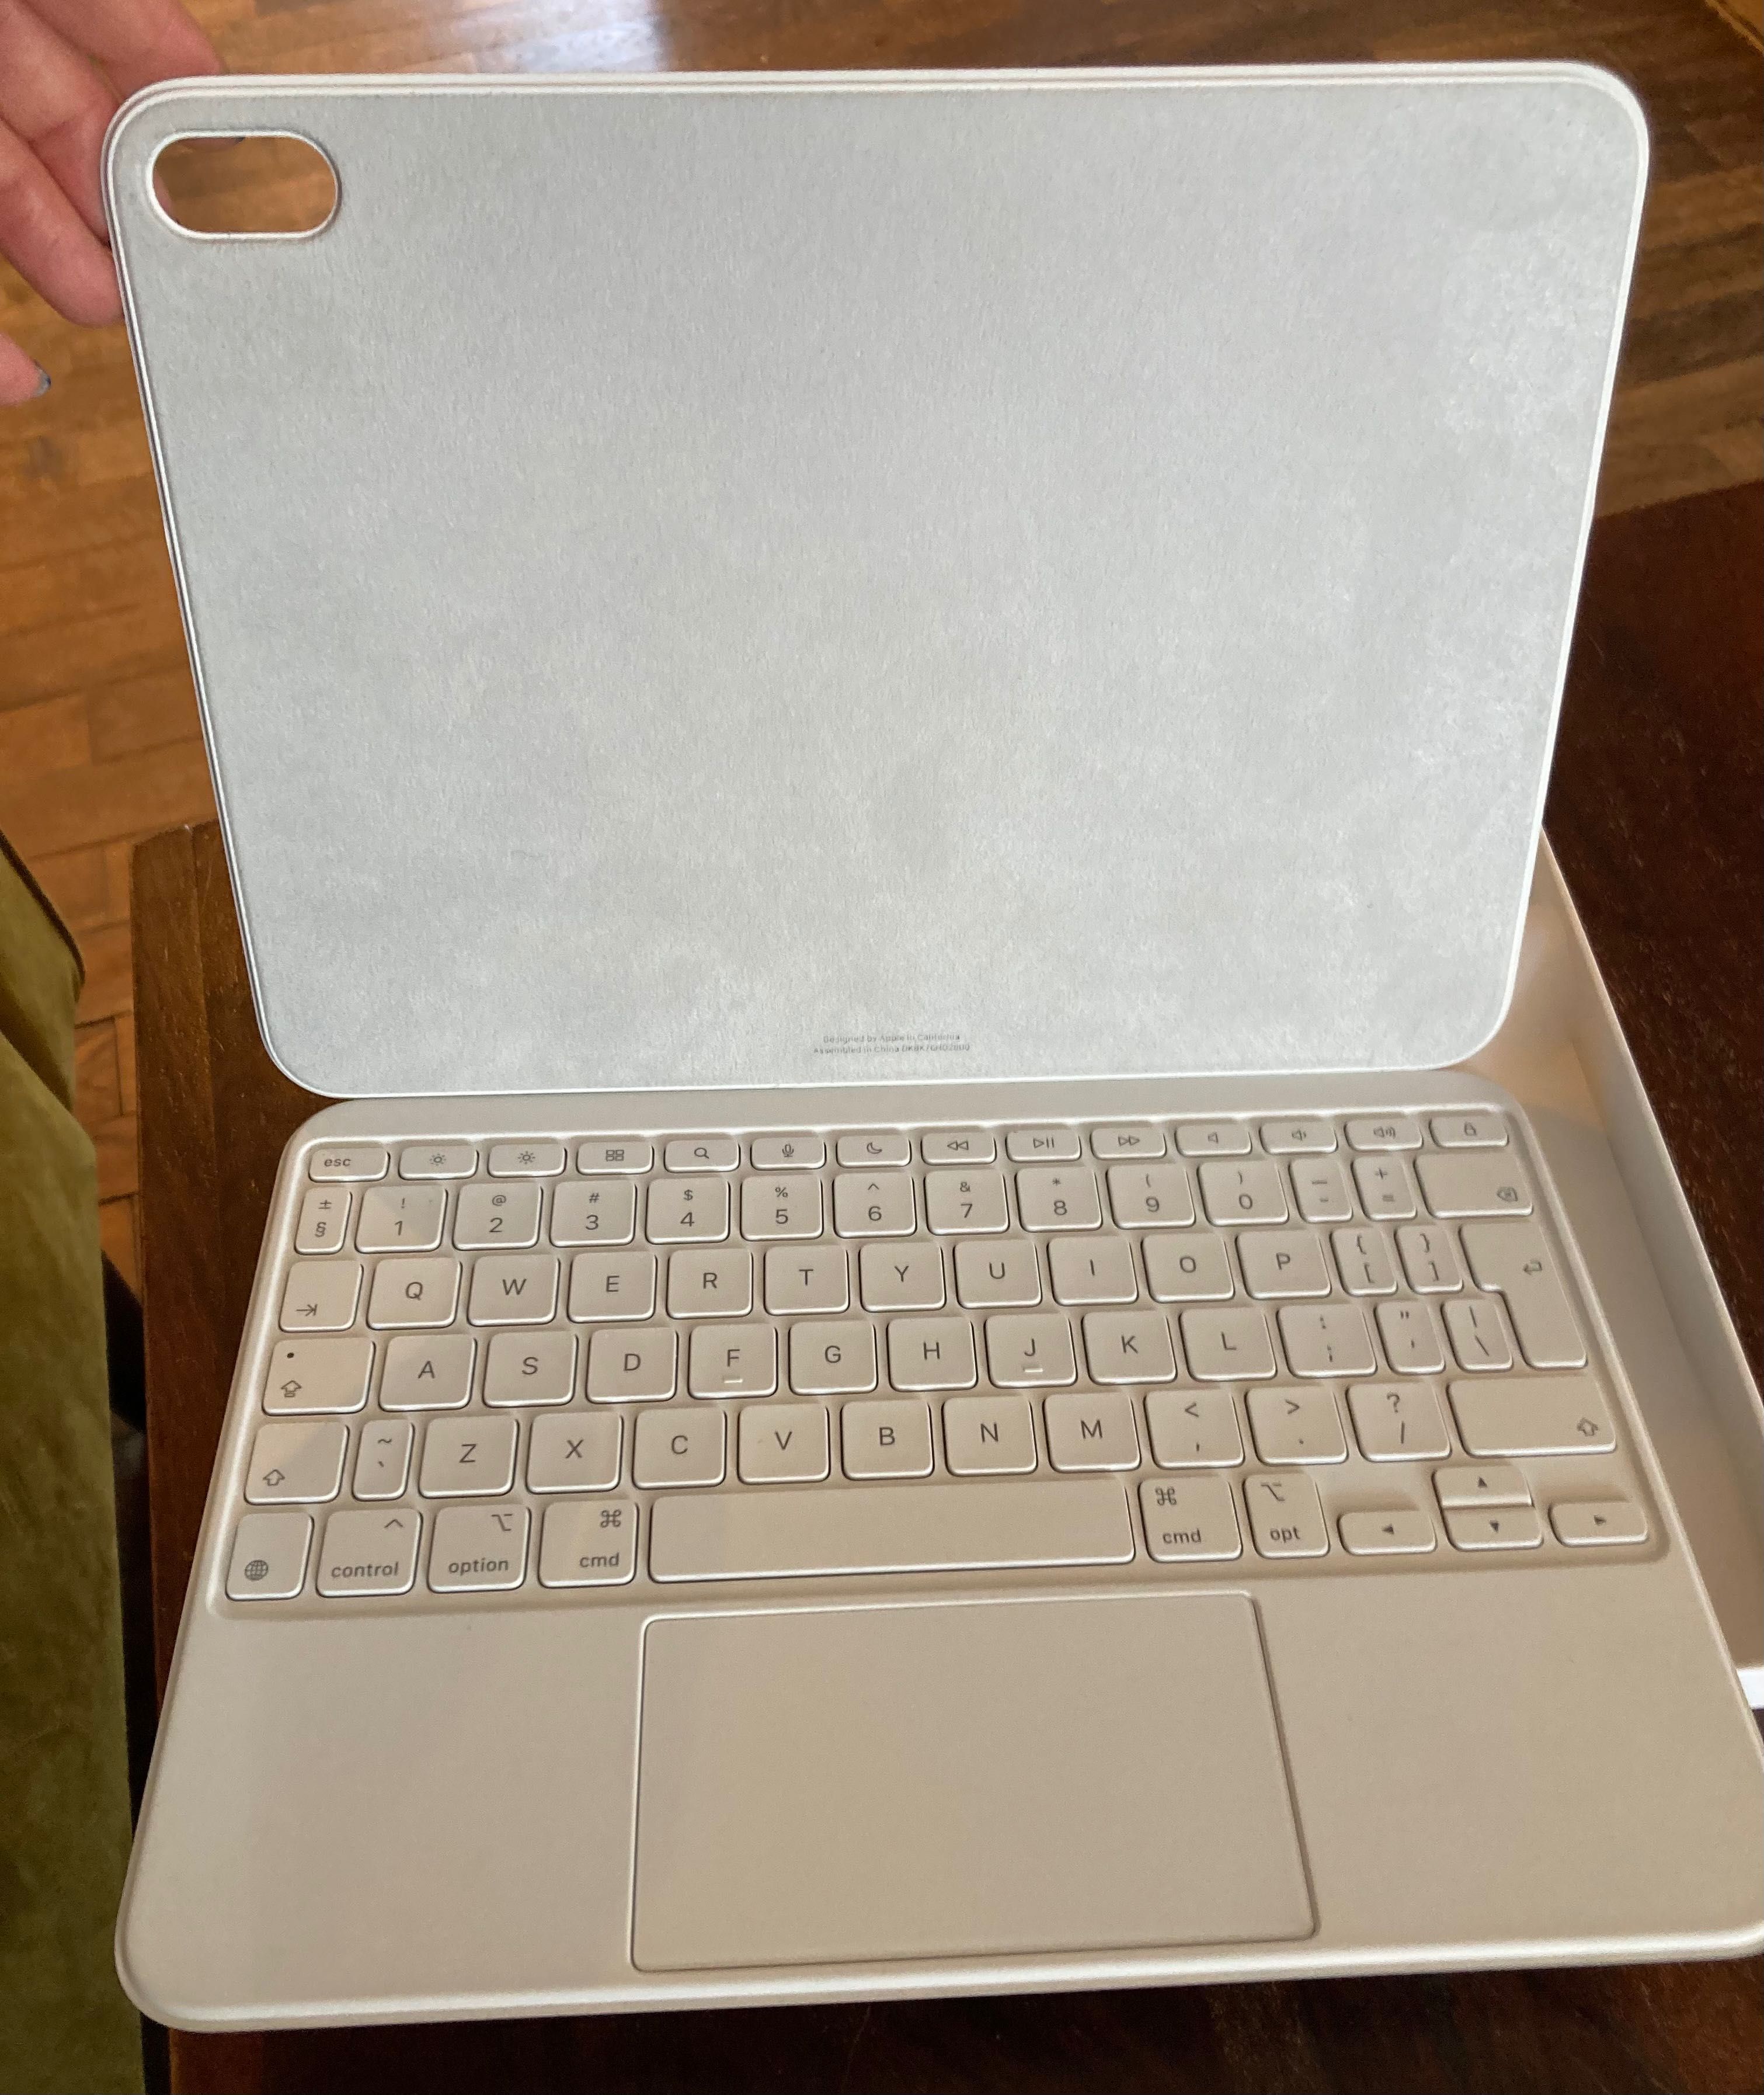 Klawiatura do iPad 10 generacji Magic Keyboard Folio